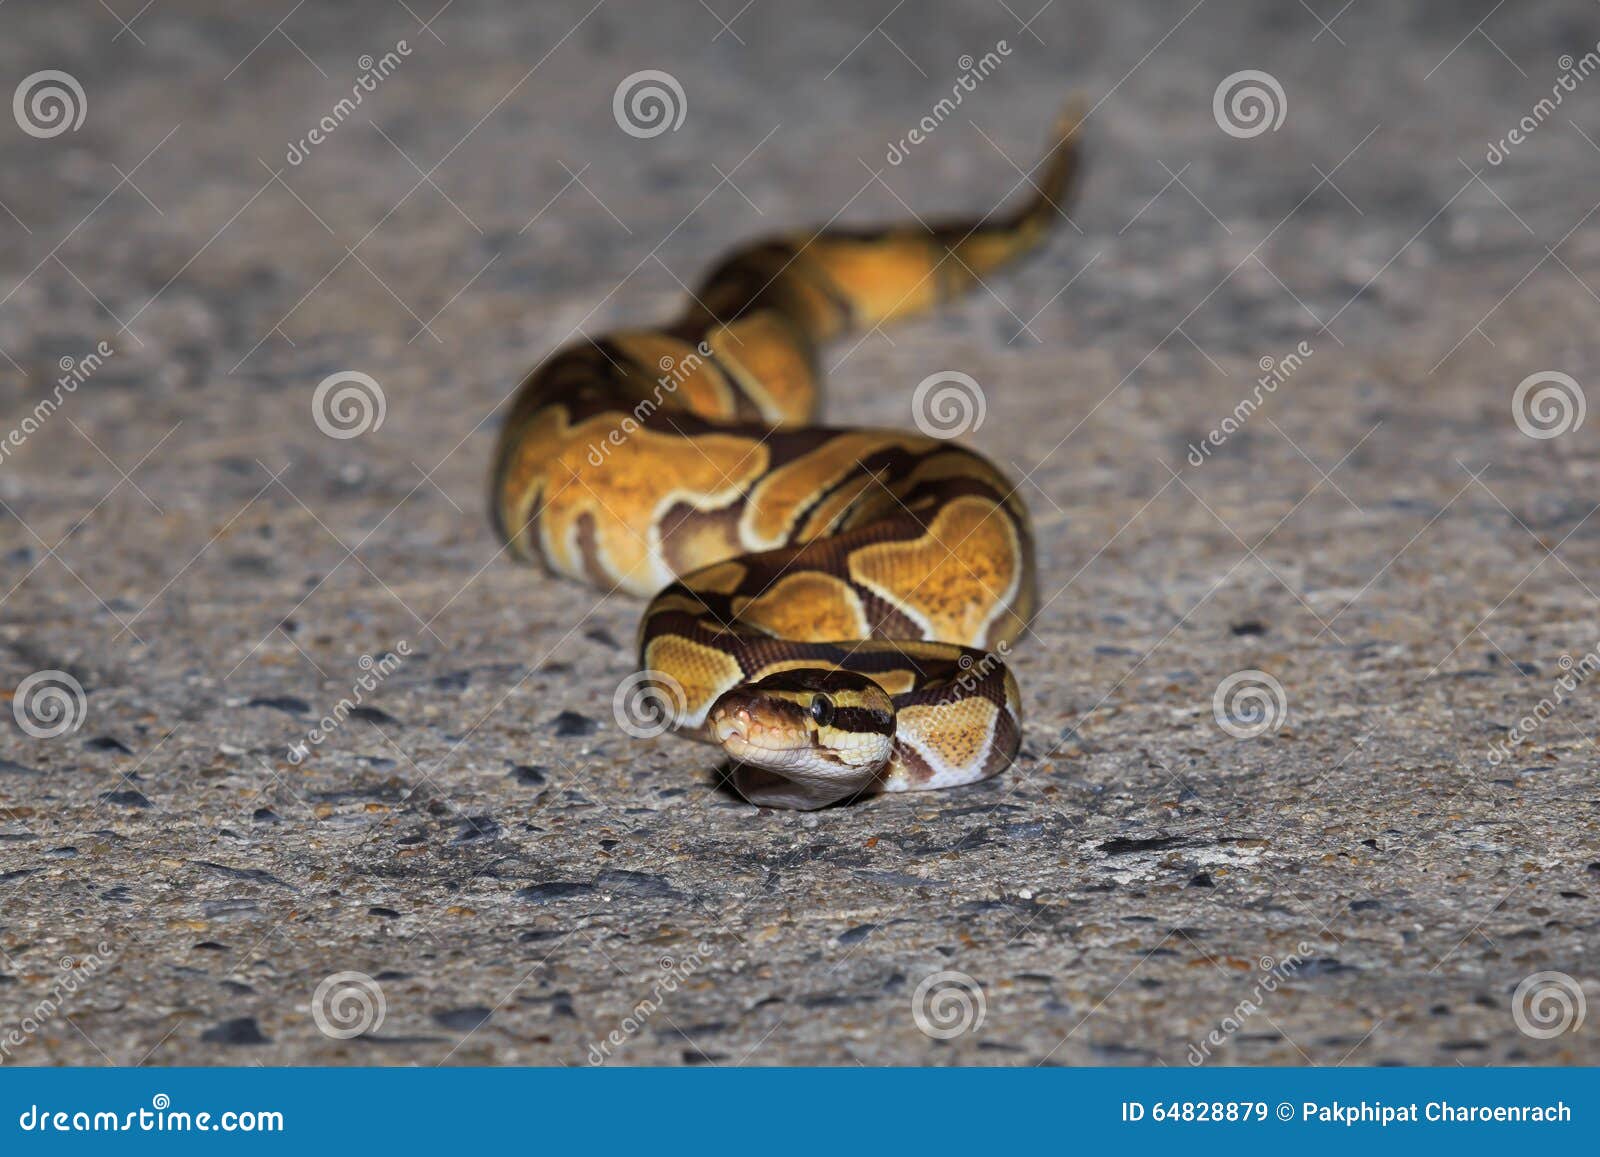 a python snake on sideway road.